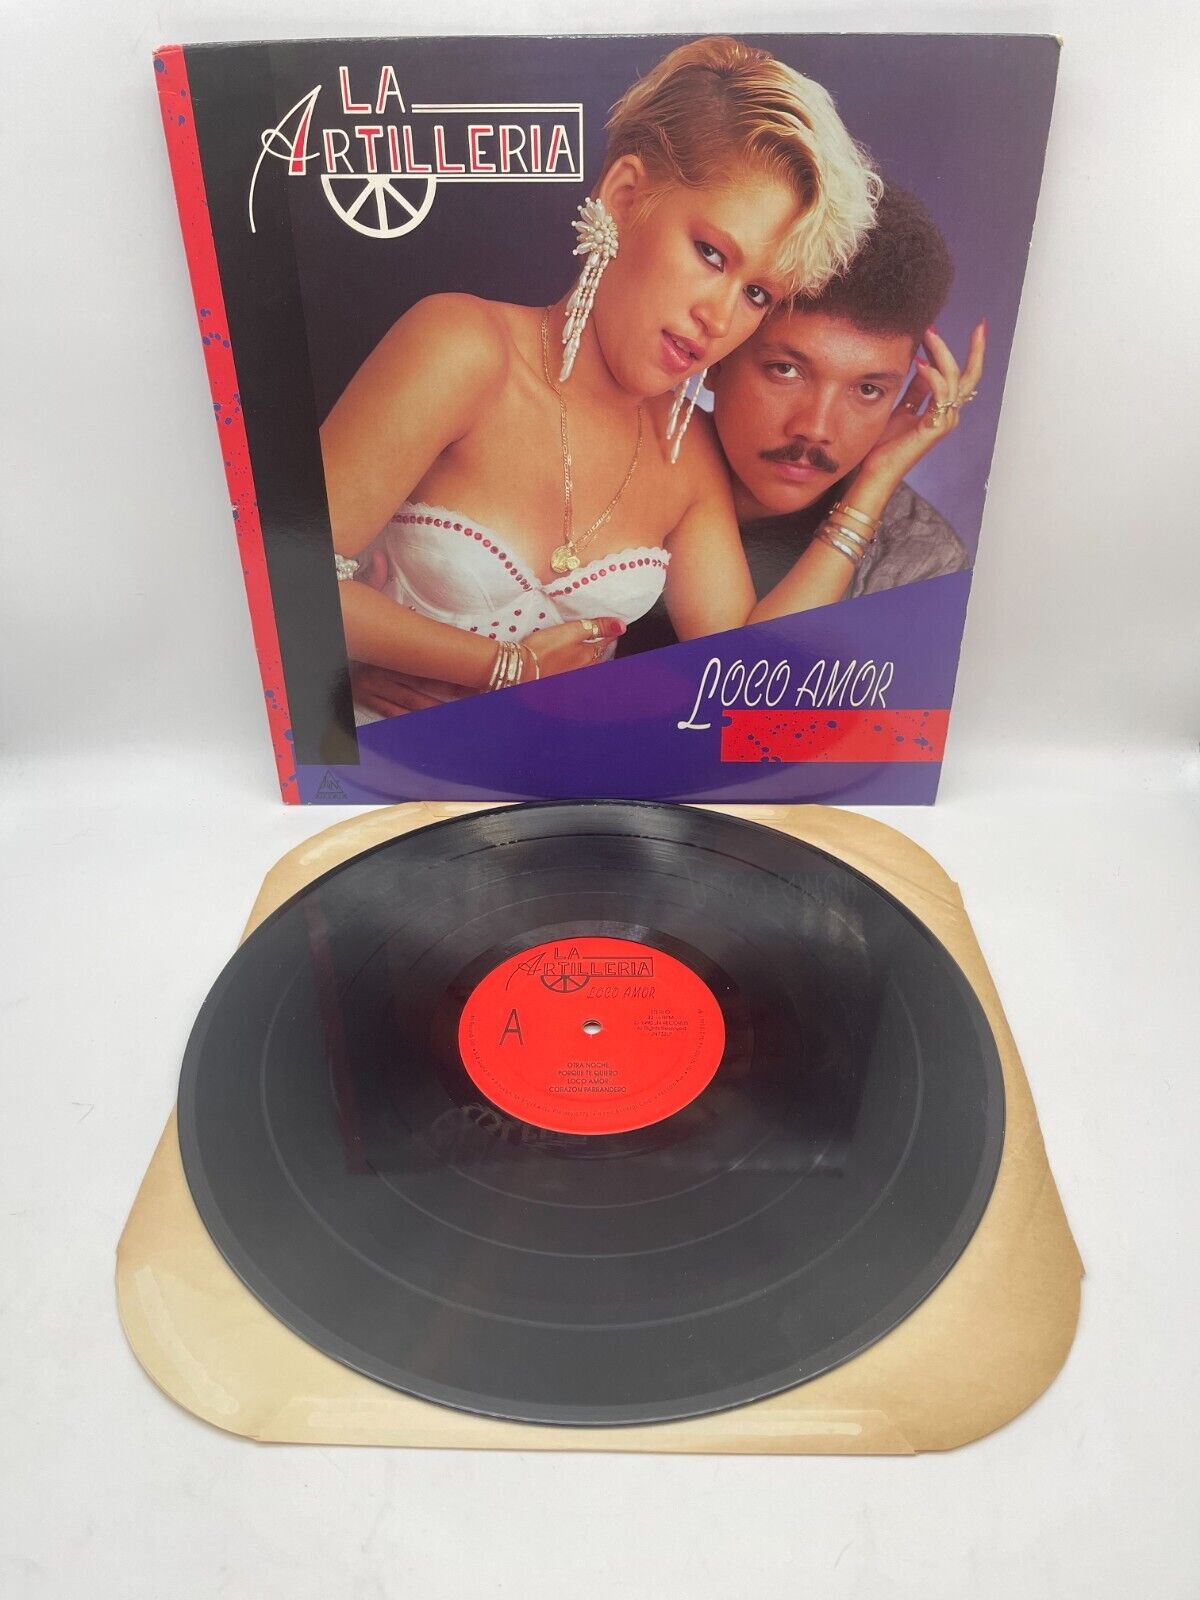 La Artilleria Loco Amor  LP 1990 J&N 732 Latin Merengue Vinyl Record